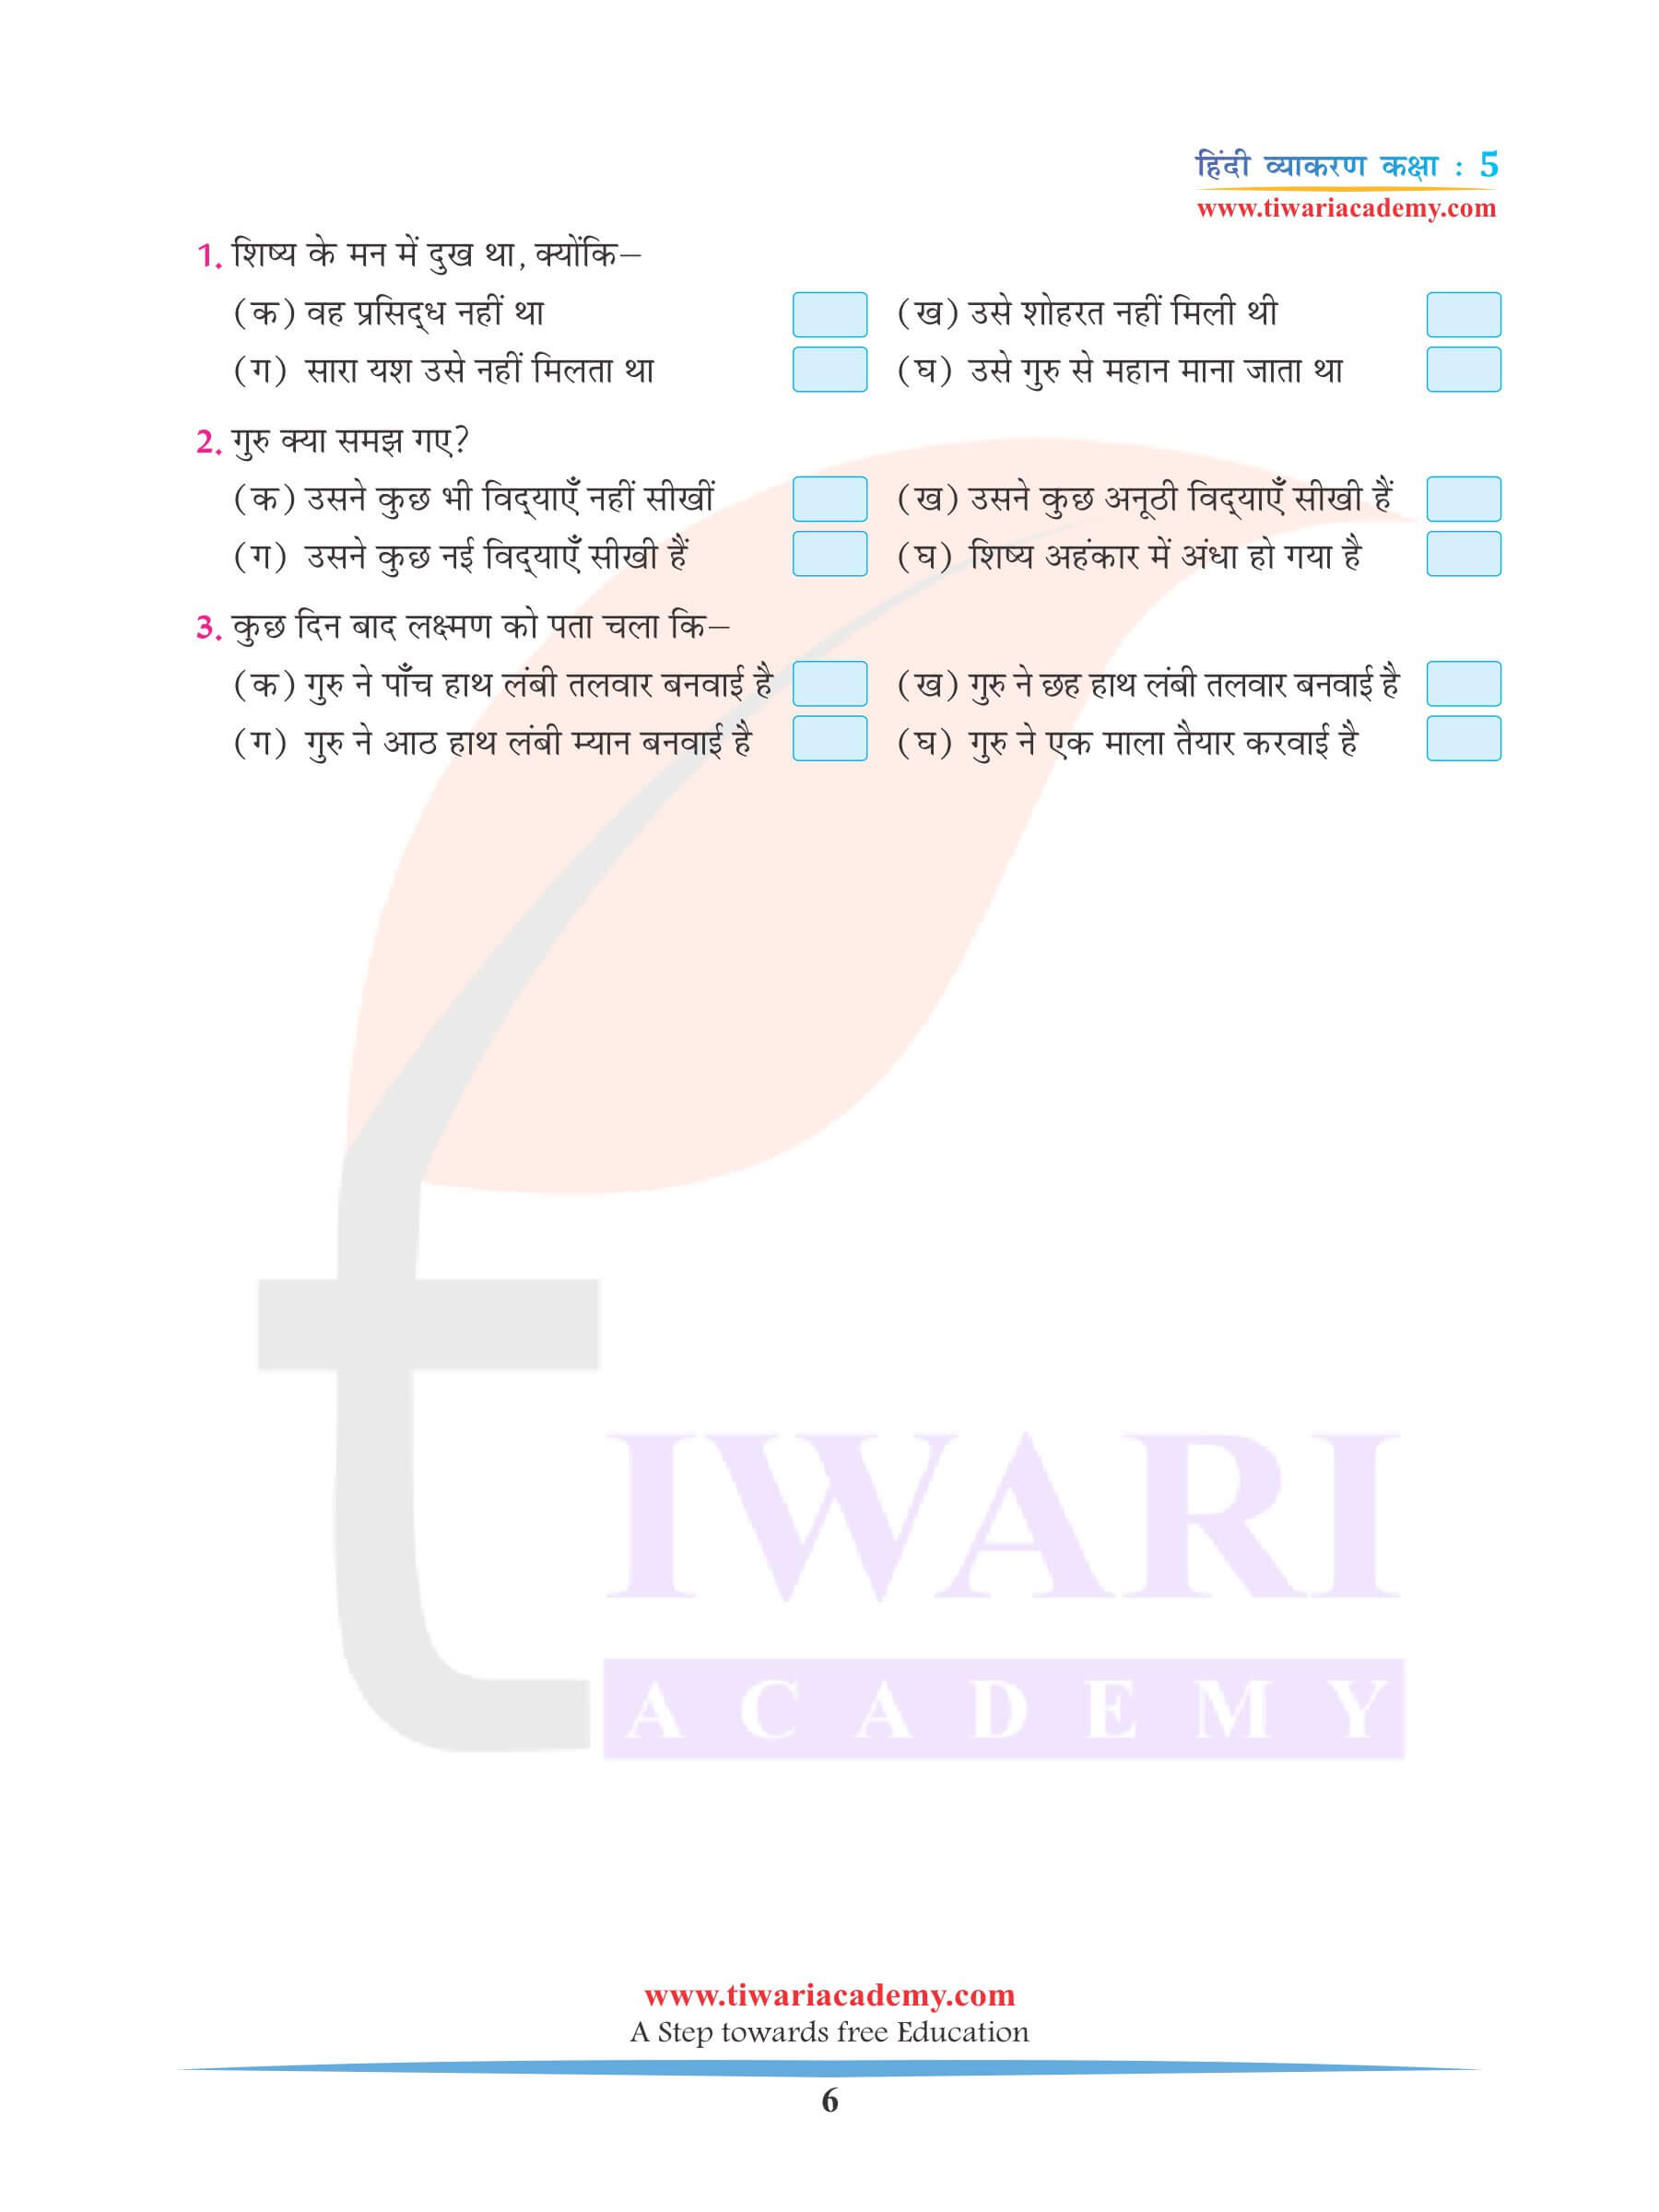 कक्षा 5 हिंदी व्याकरण अध्याय 19 अपठित गद्यांश अभ्यास